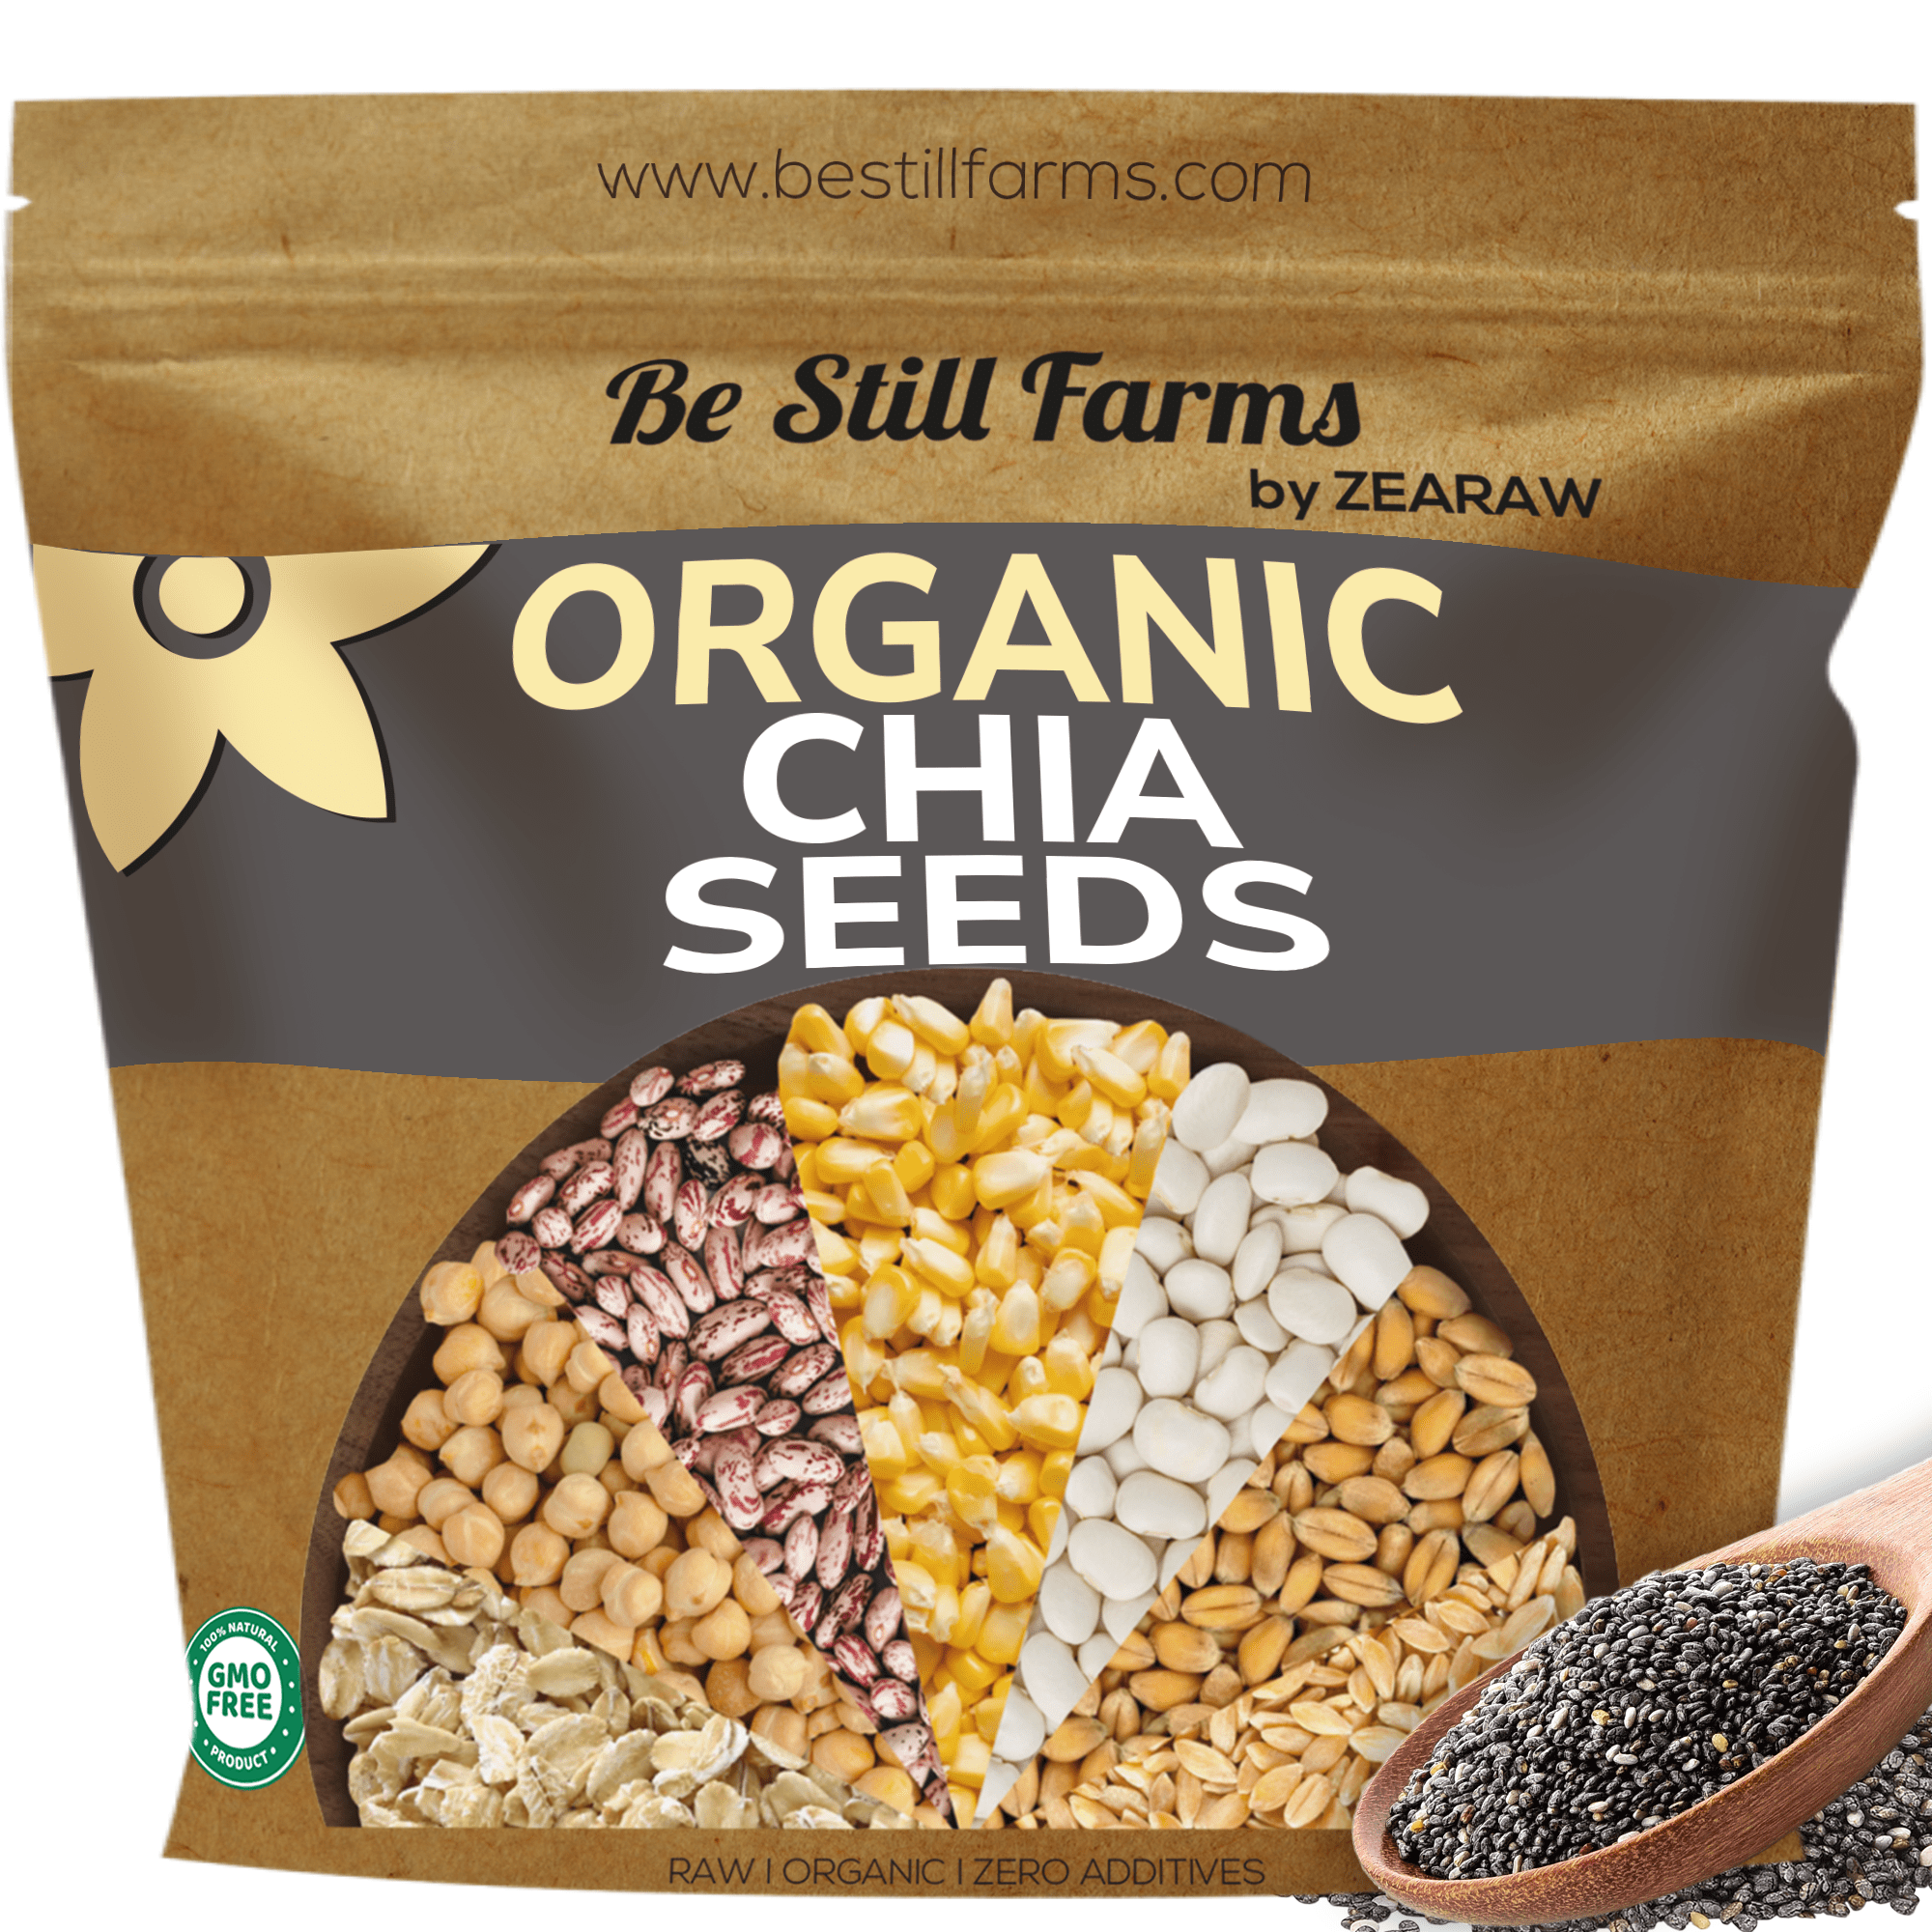 Organic Chia Seeds - Be Still Farms